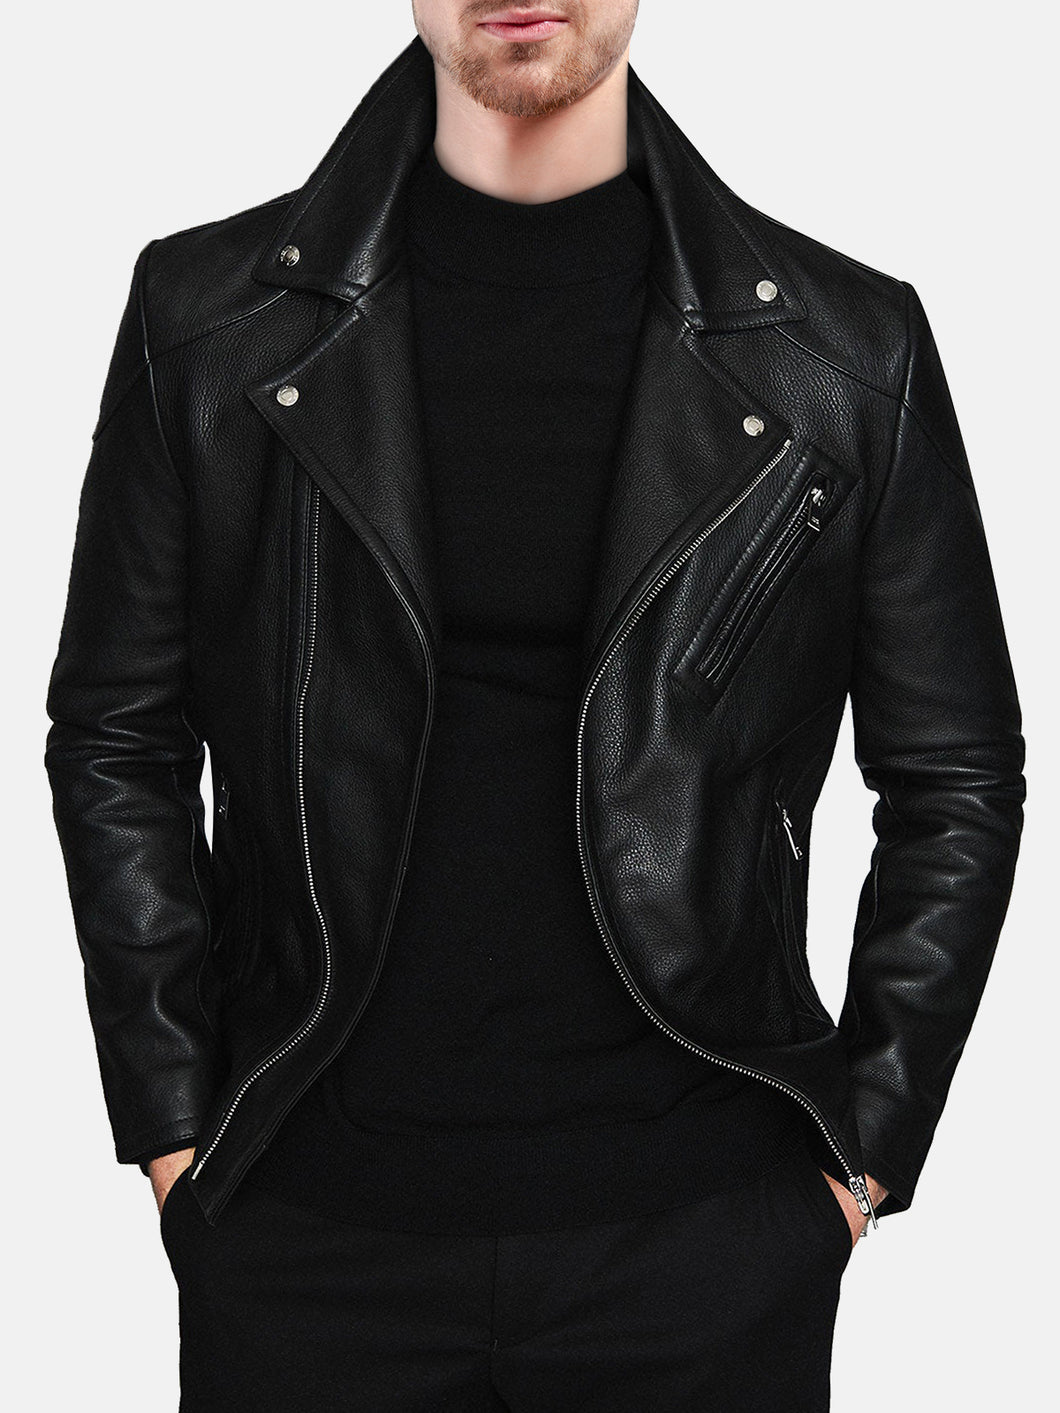 Mens black genuine leather jacket